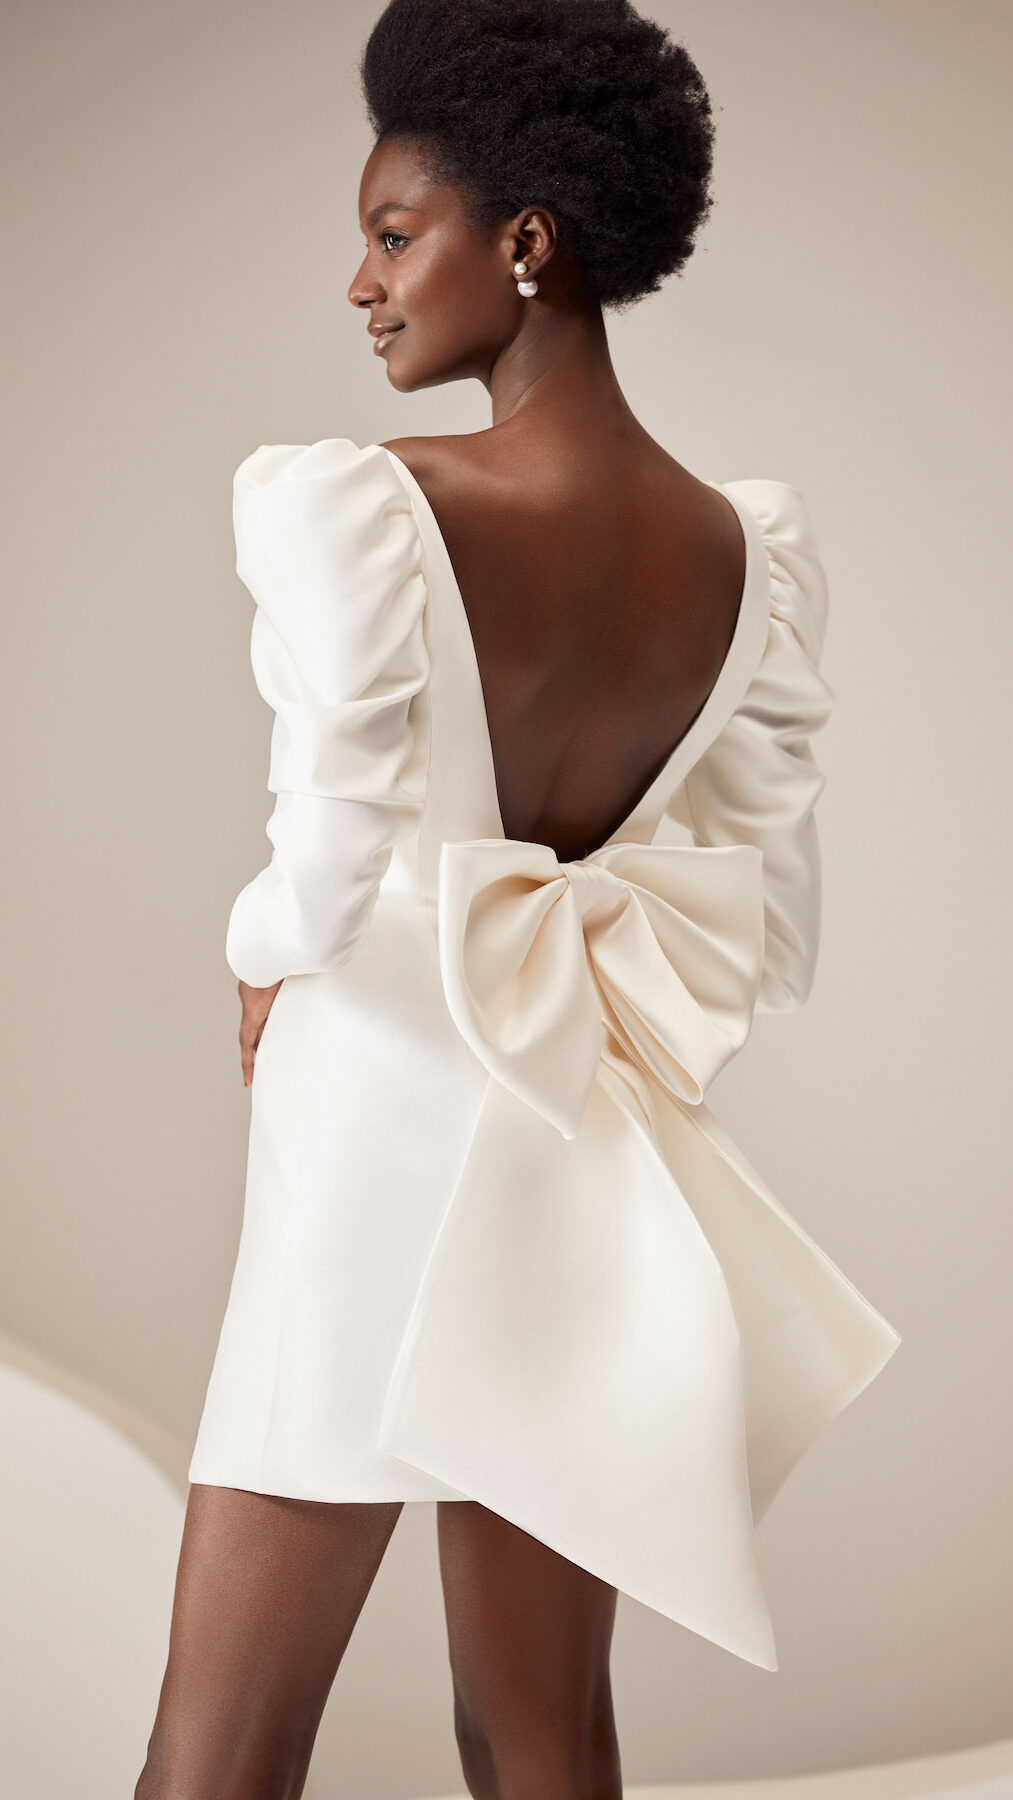 Open back short Wedding Dress by Milla Nova - Honey white lace